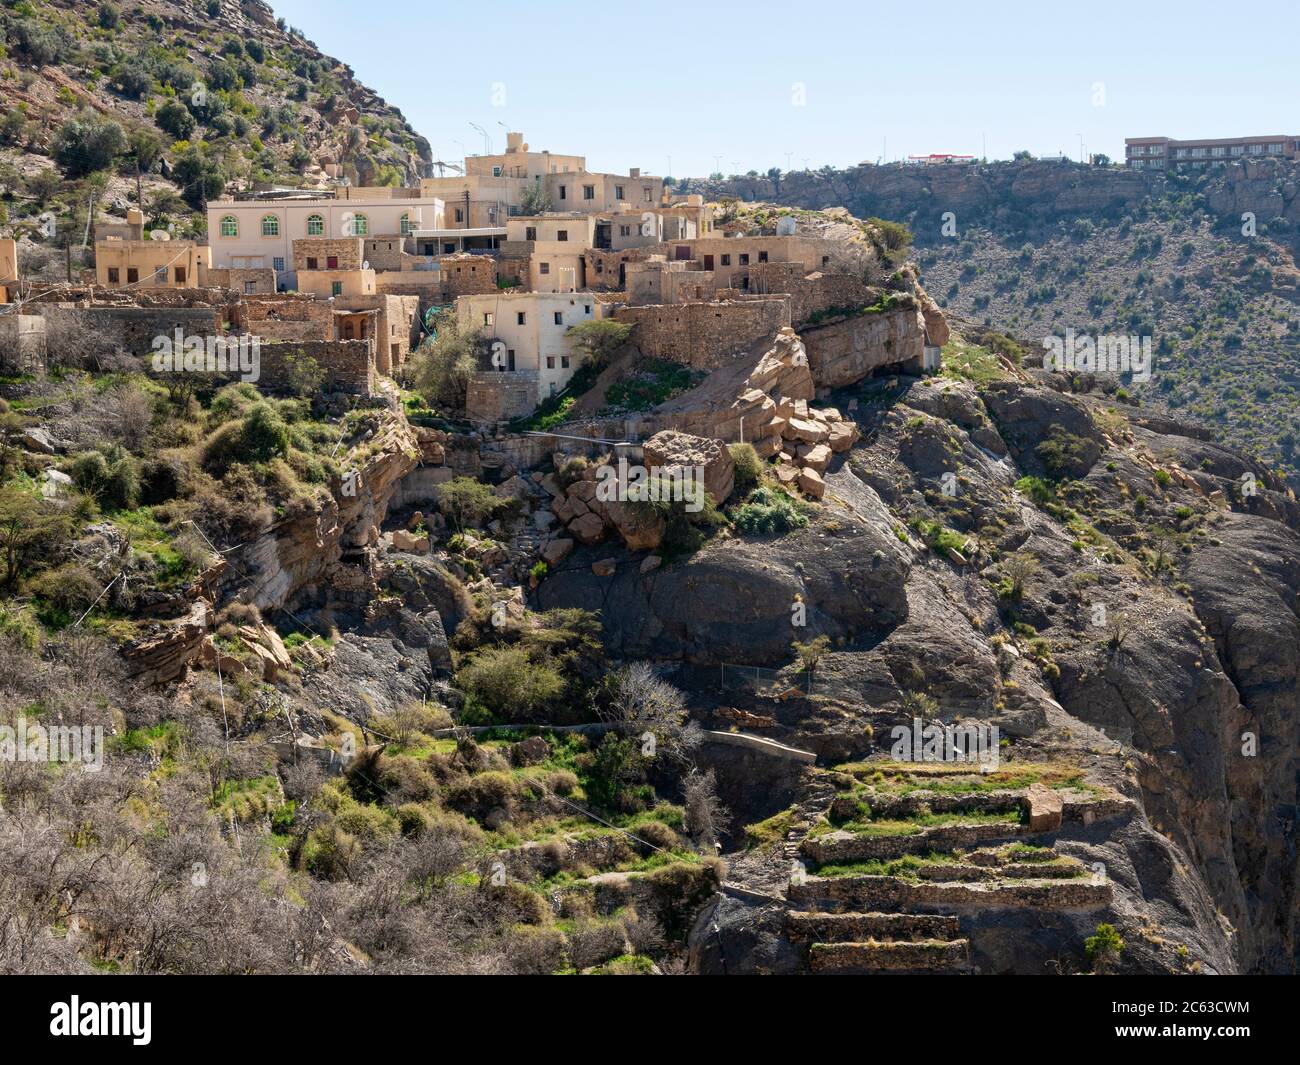 Terrassenförmige Gärten säumen die Klippen in der Nähe traditioneller Dörfer des Sayq-Plateaus, Sultanat von Oman. Stockfoto